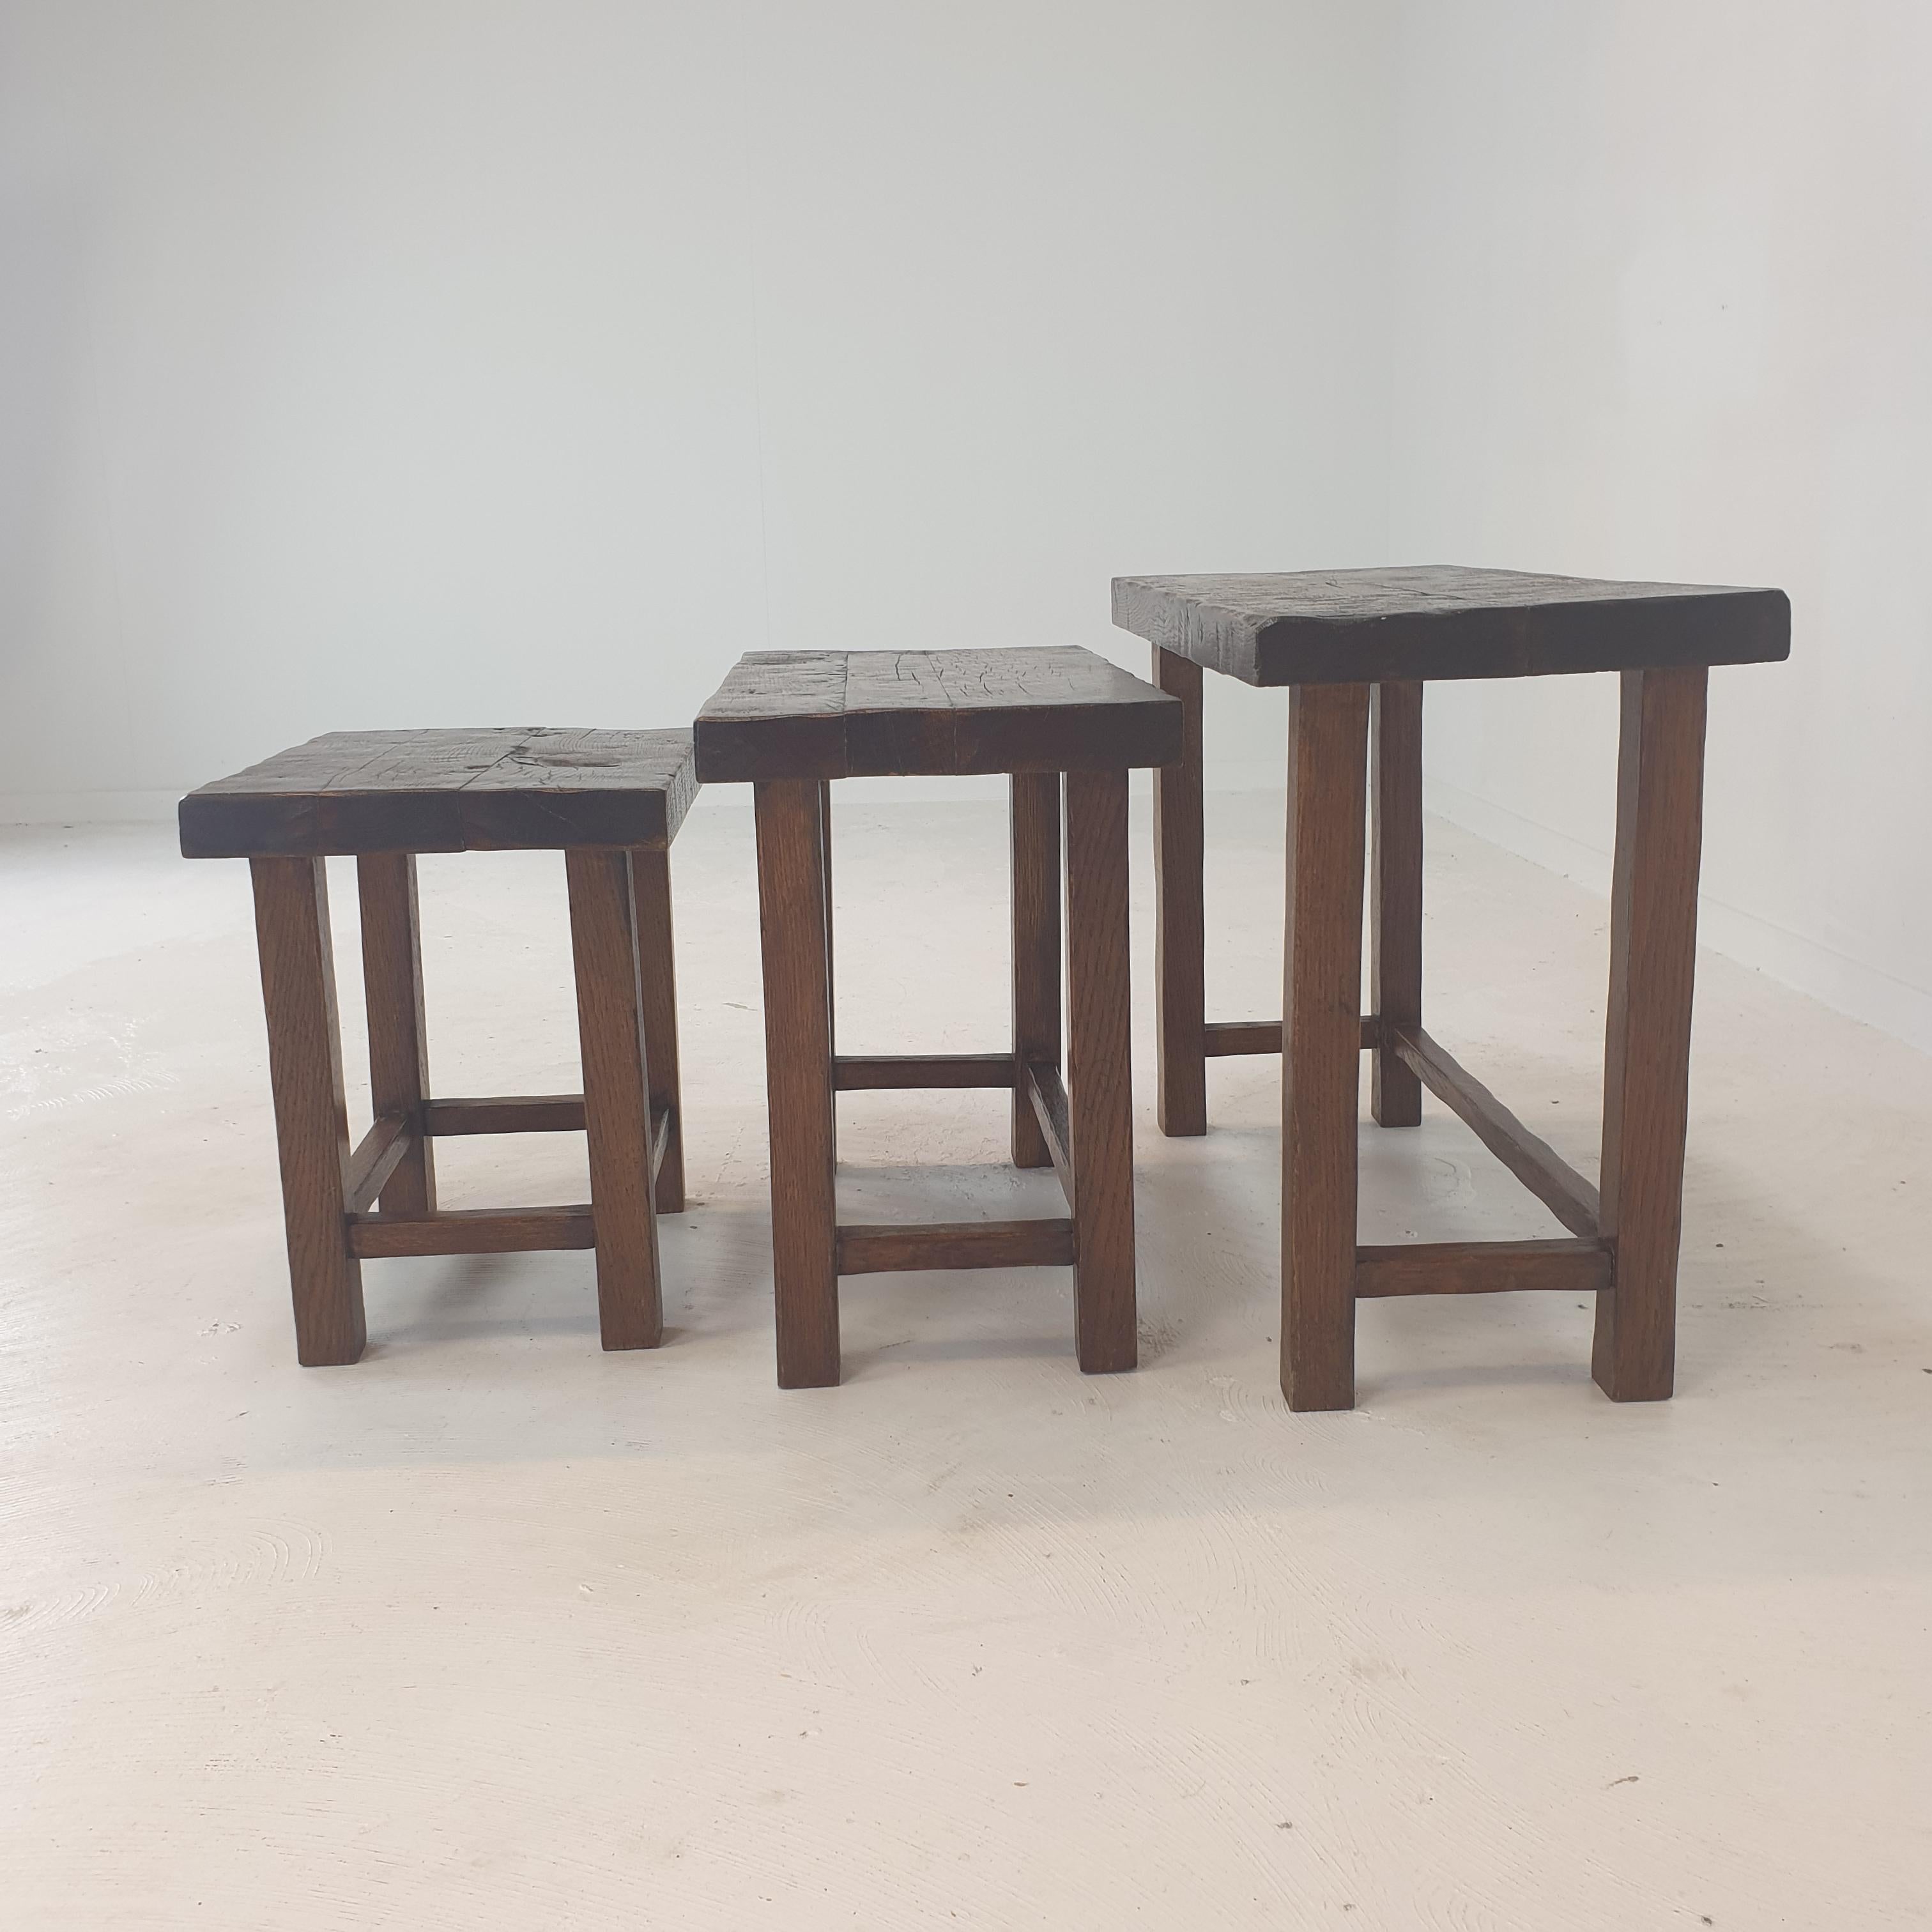 Set of 3 Brutalist Wooden Nesting Tables, Holland 1960s For Sale 4